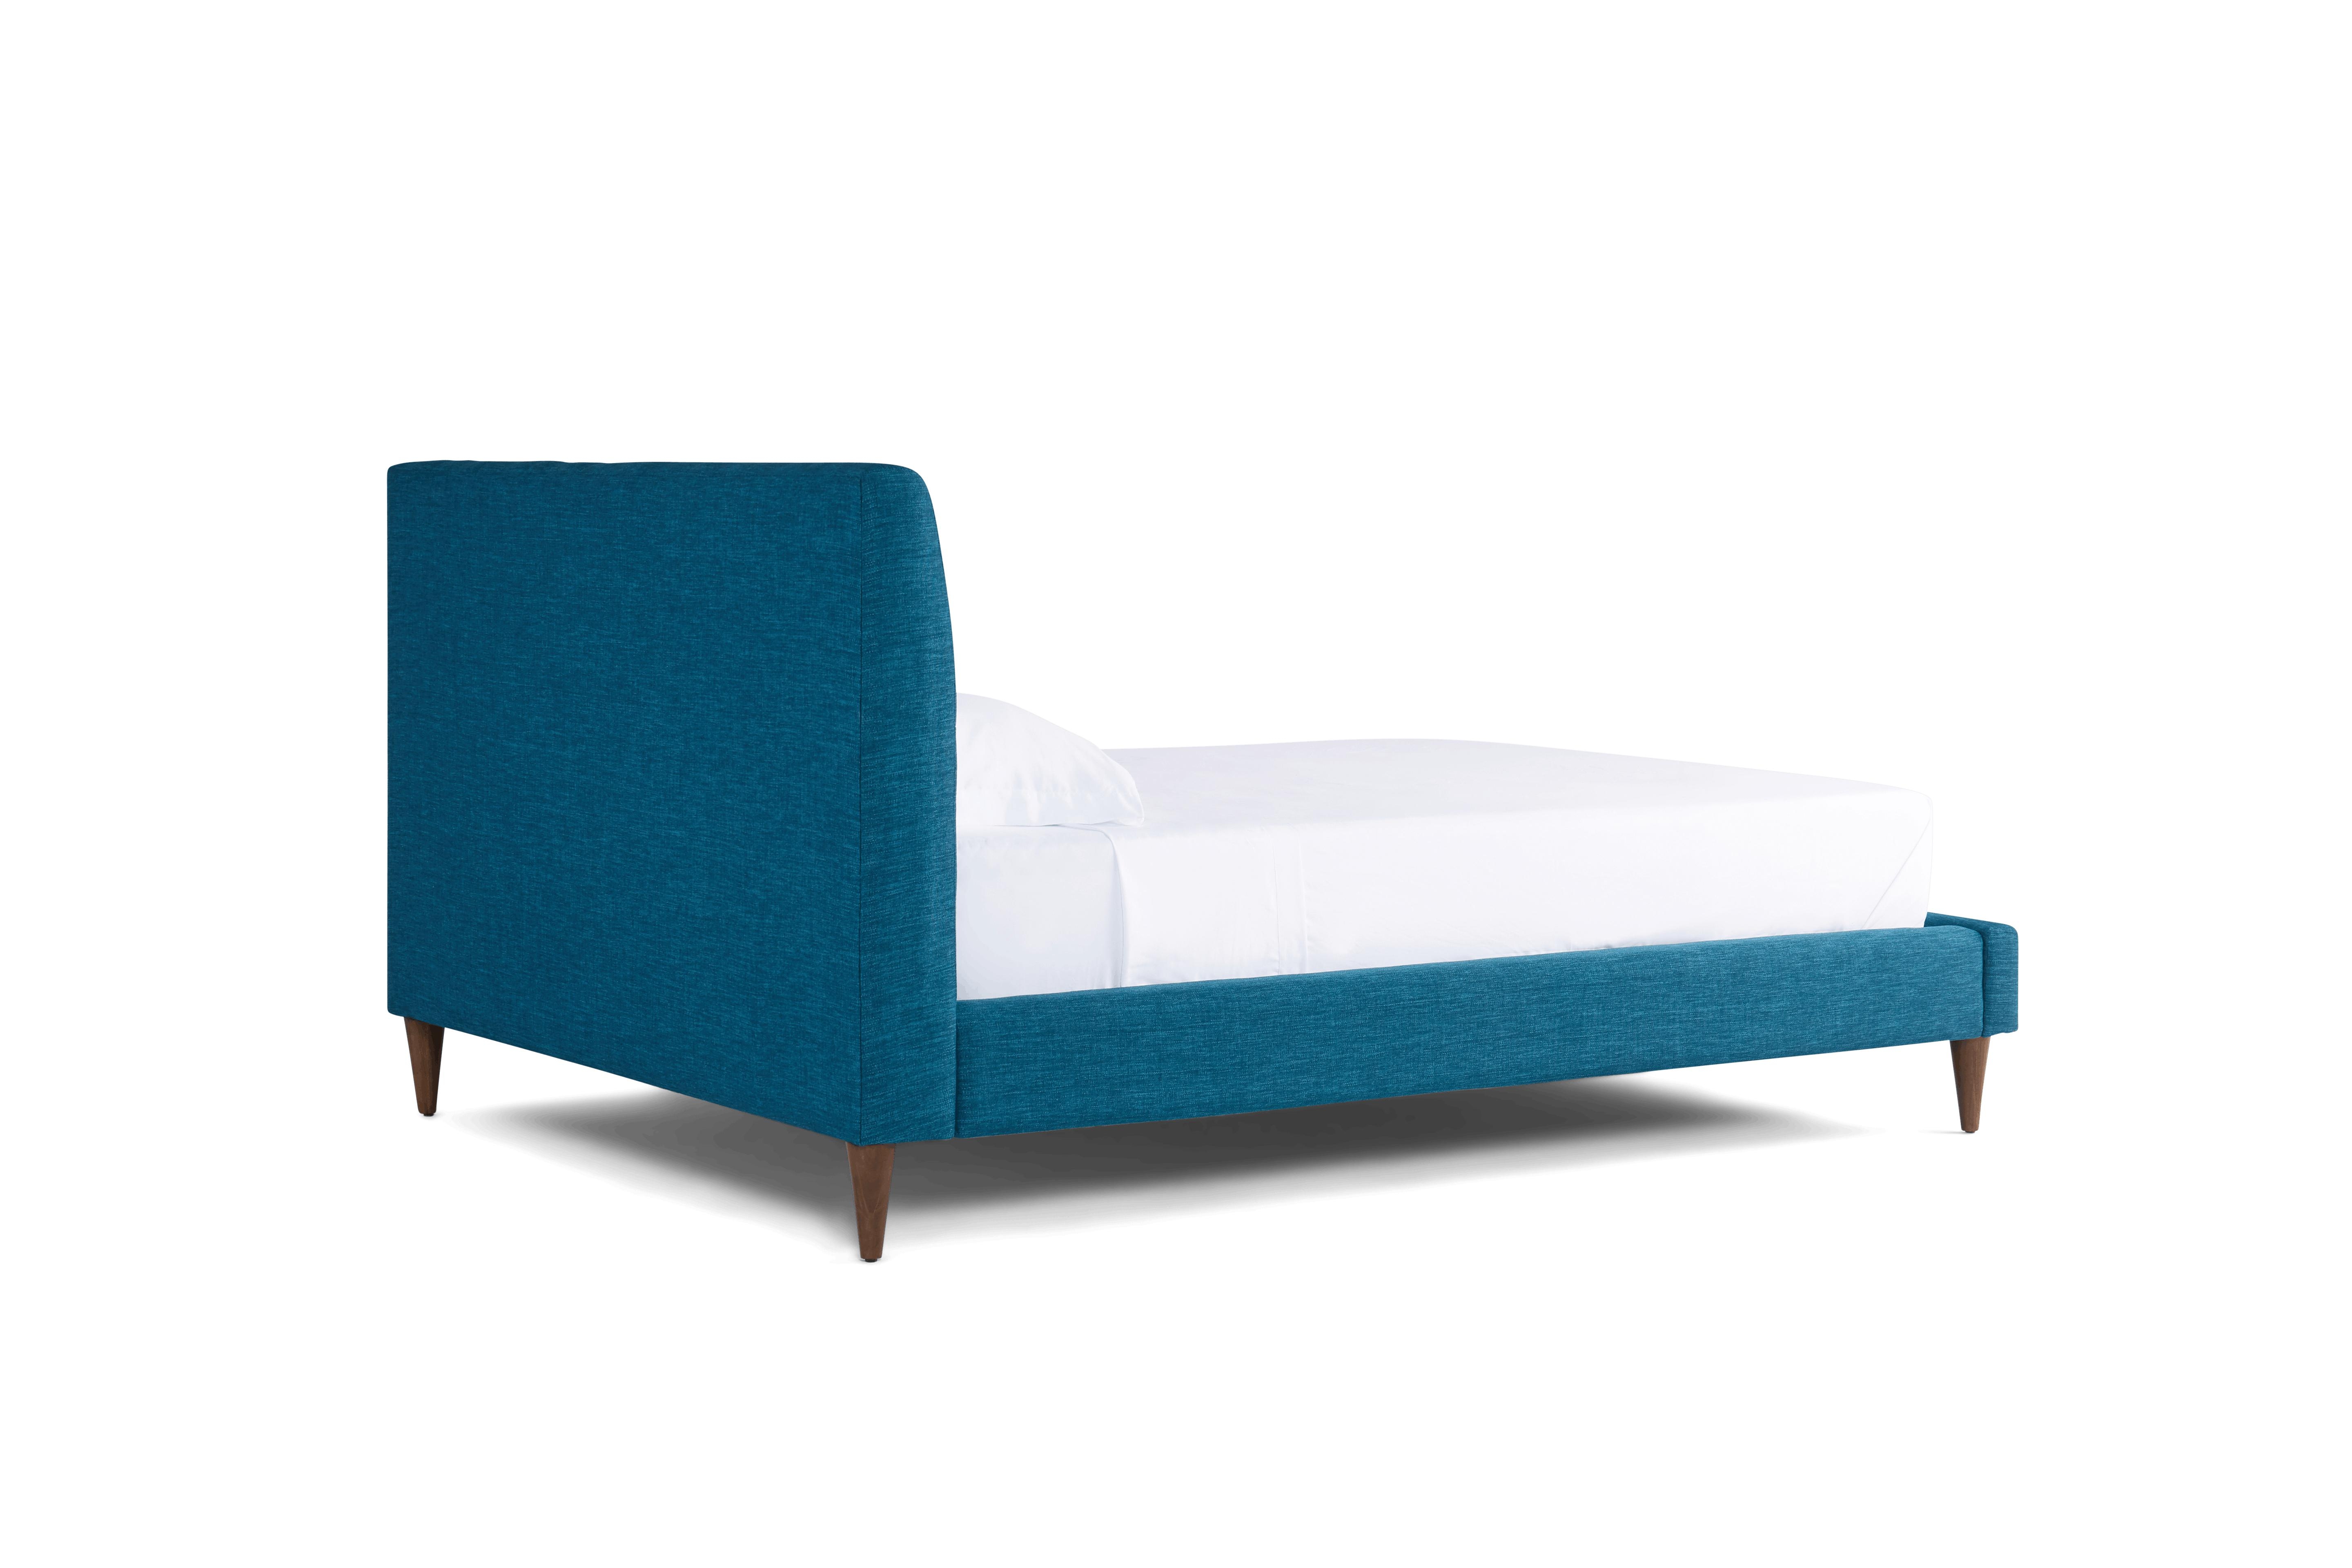 Blue Eliot Mid Century Modern Bed - Key Largo Zenith Teal - Mocha - Cal King - Image 3